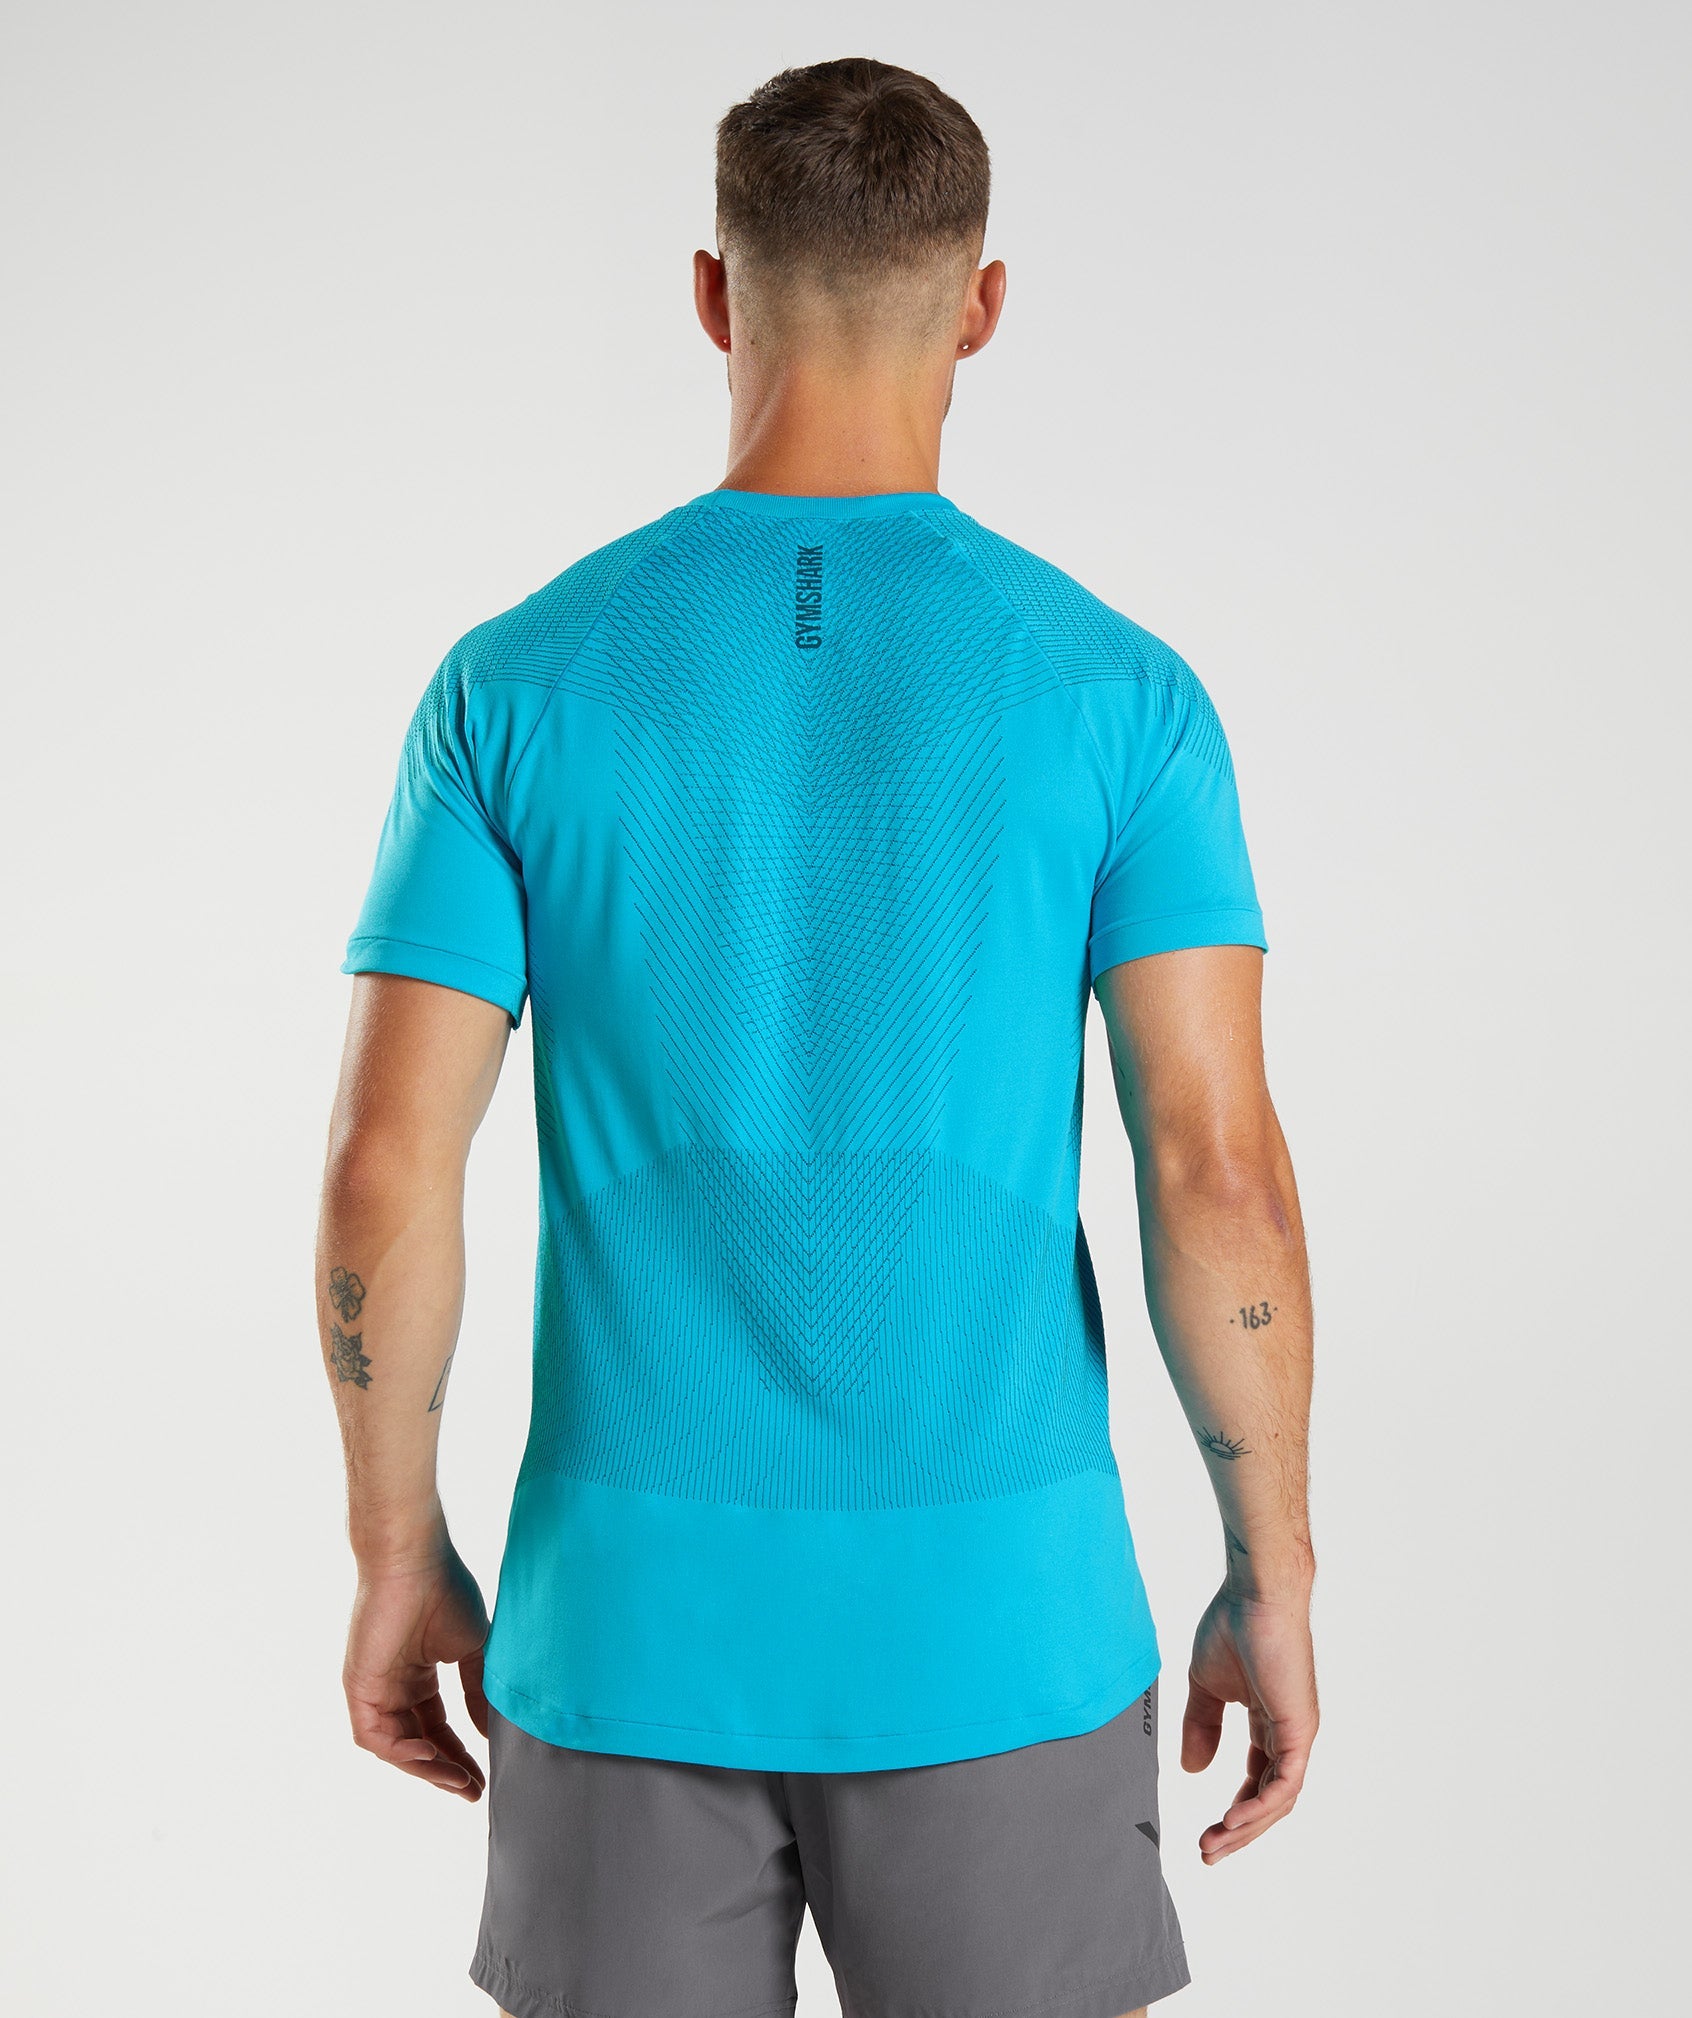 Apex Seamless T-Shirt in Shark Blue/Atlantic Blue - view 2